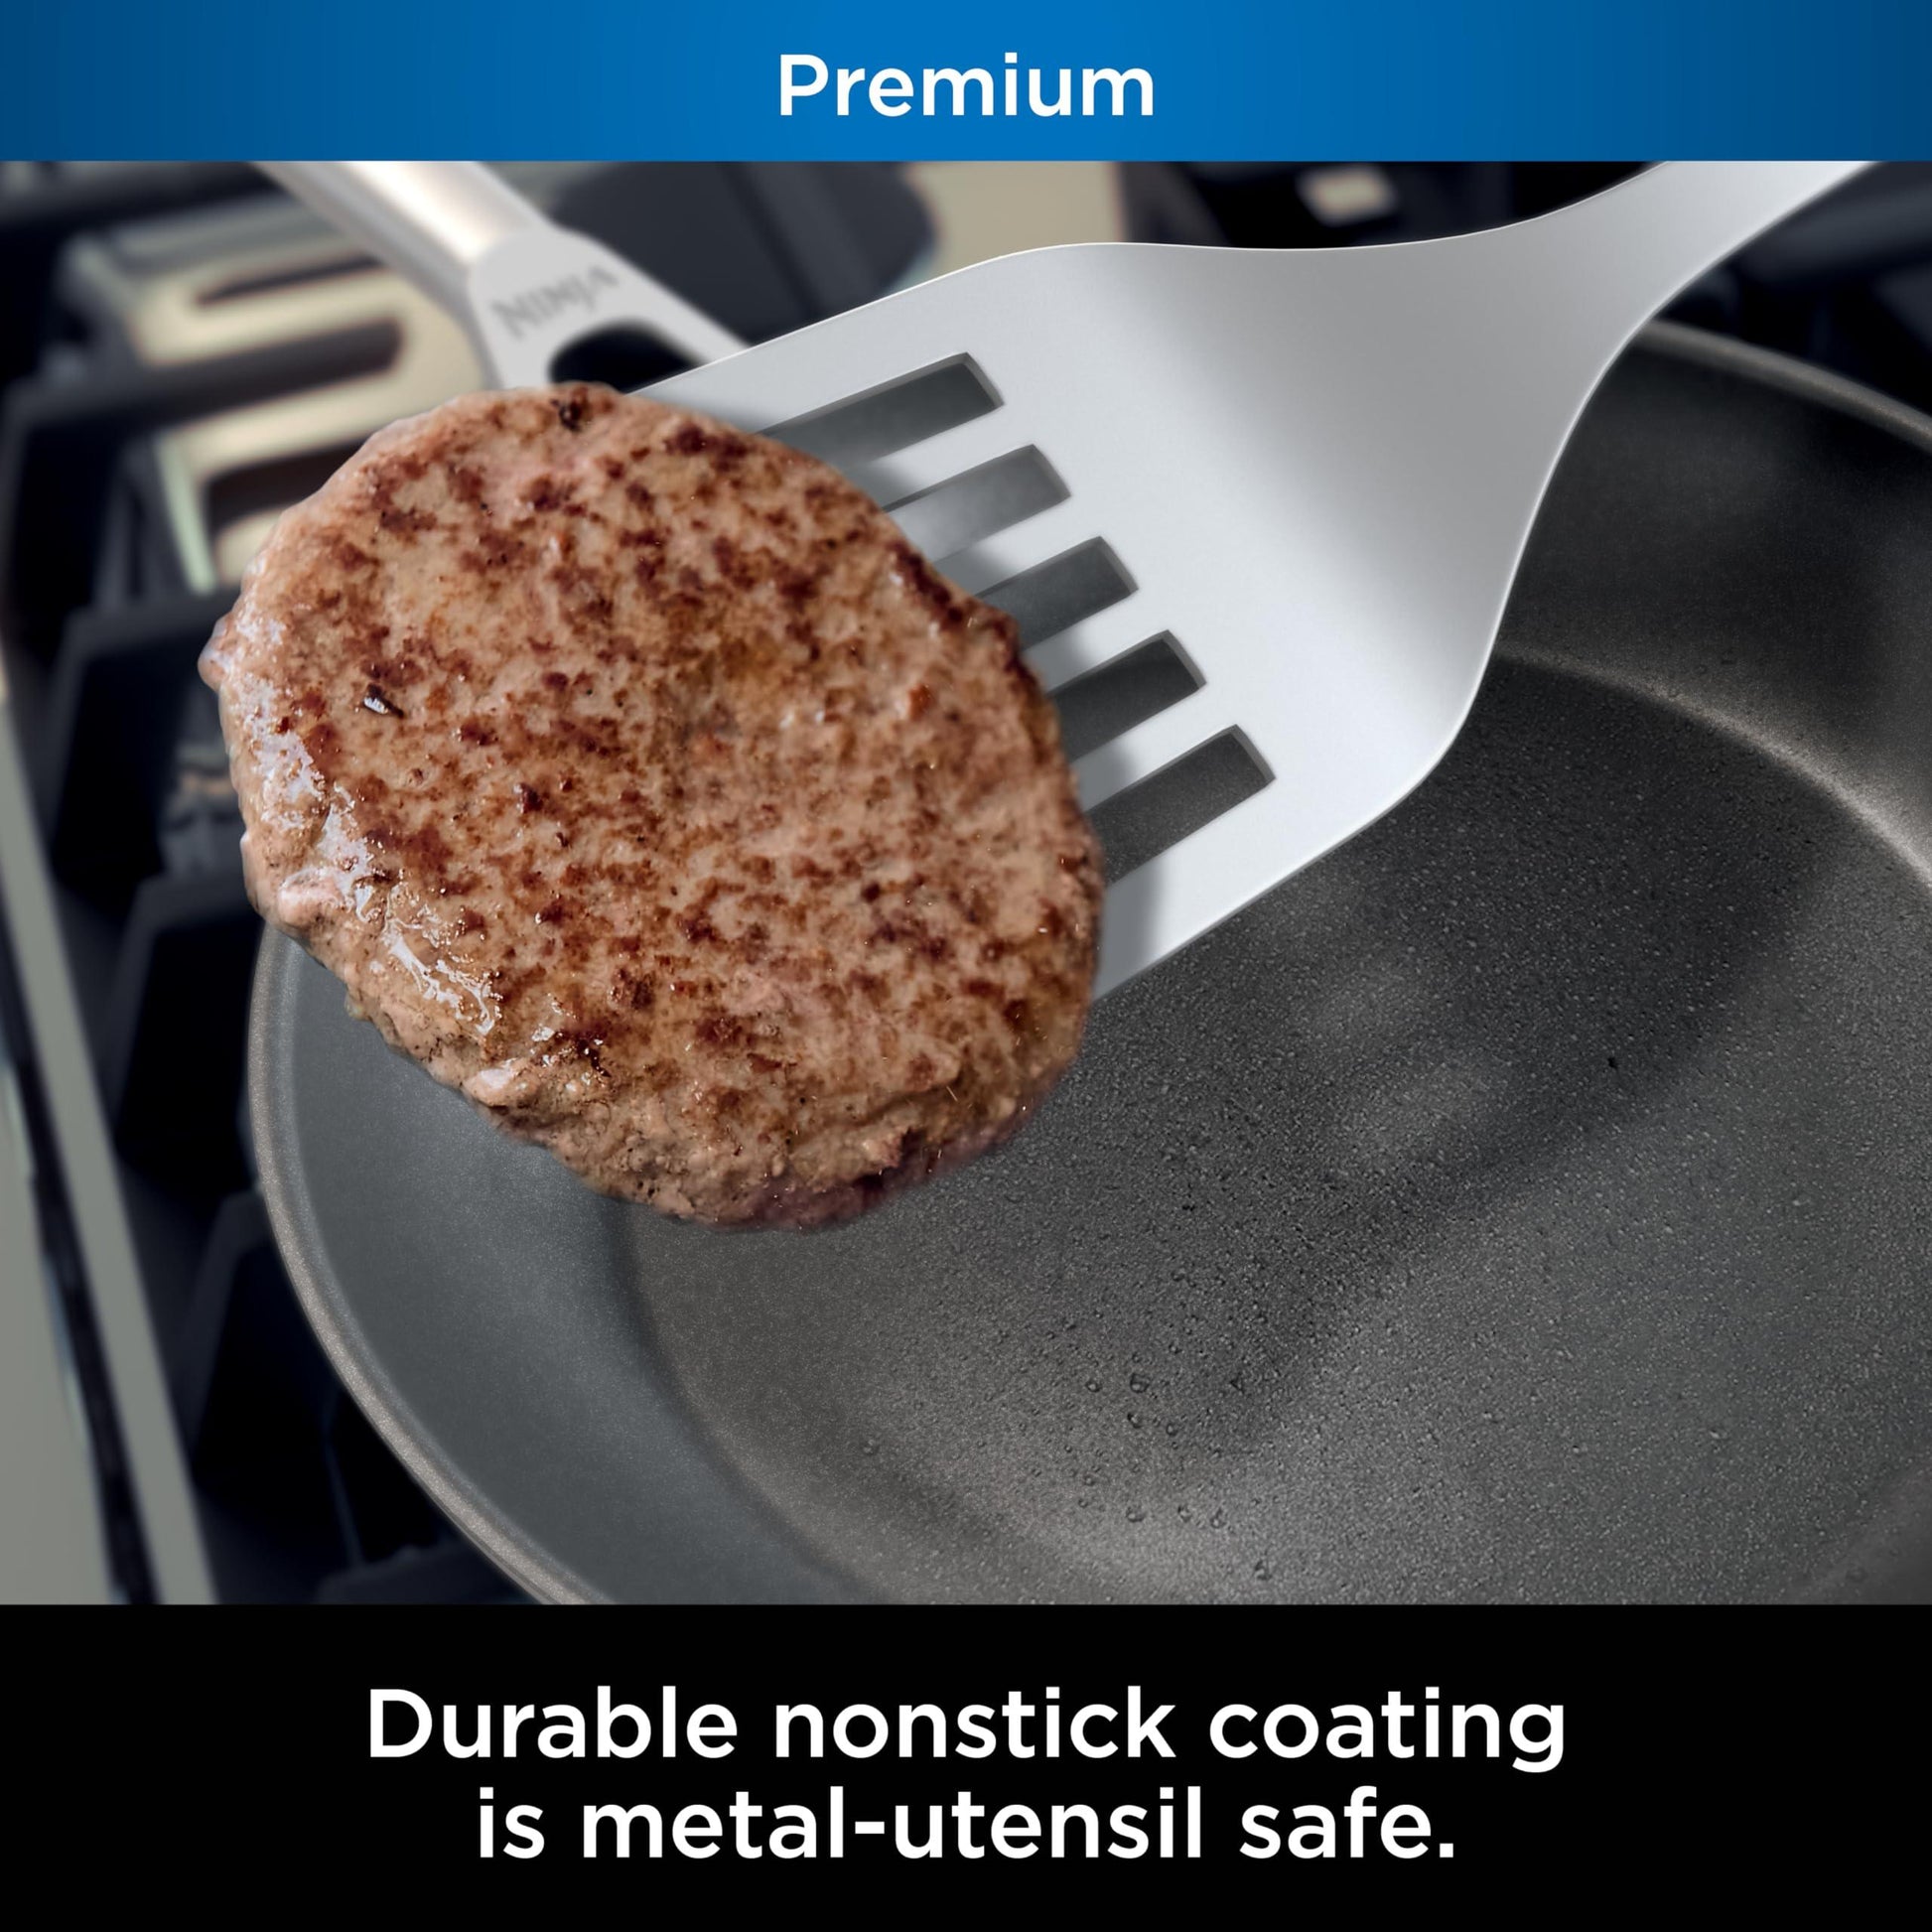 Ninja C30030 Foodi NeverStick Premium 12-Inch Fry Pan, Hard-Anodized, Nonstick, Durable & Oven Safe to 500°F, Slate Grey - CookCave